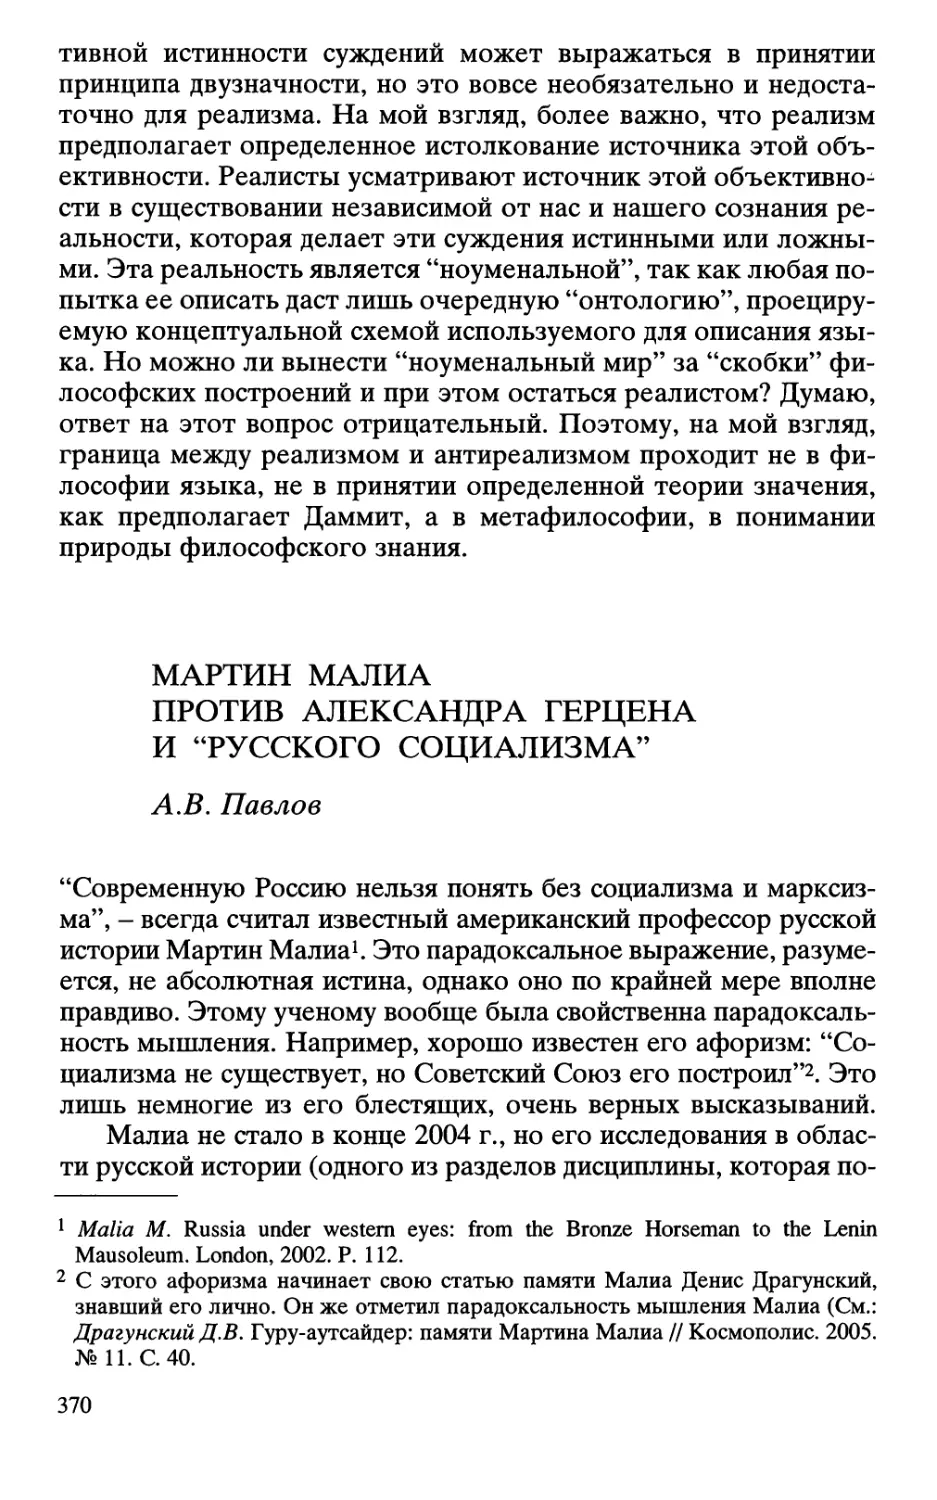 Павлов A.B. Мартин Малиа против Александра Герцена и “русского социализма”